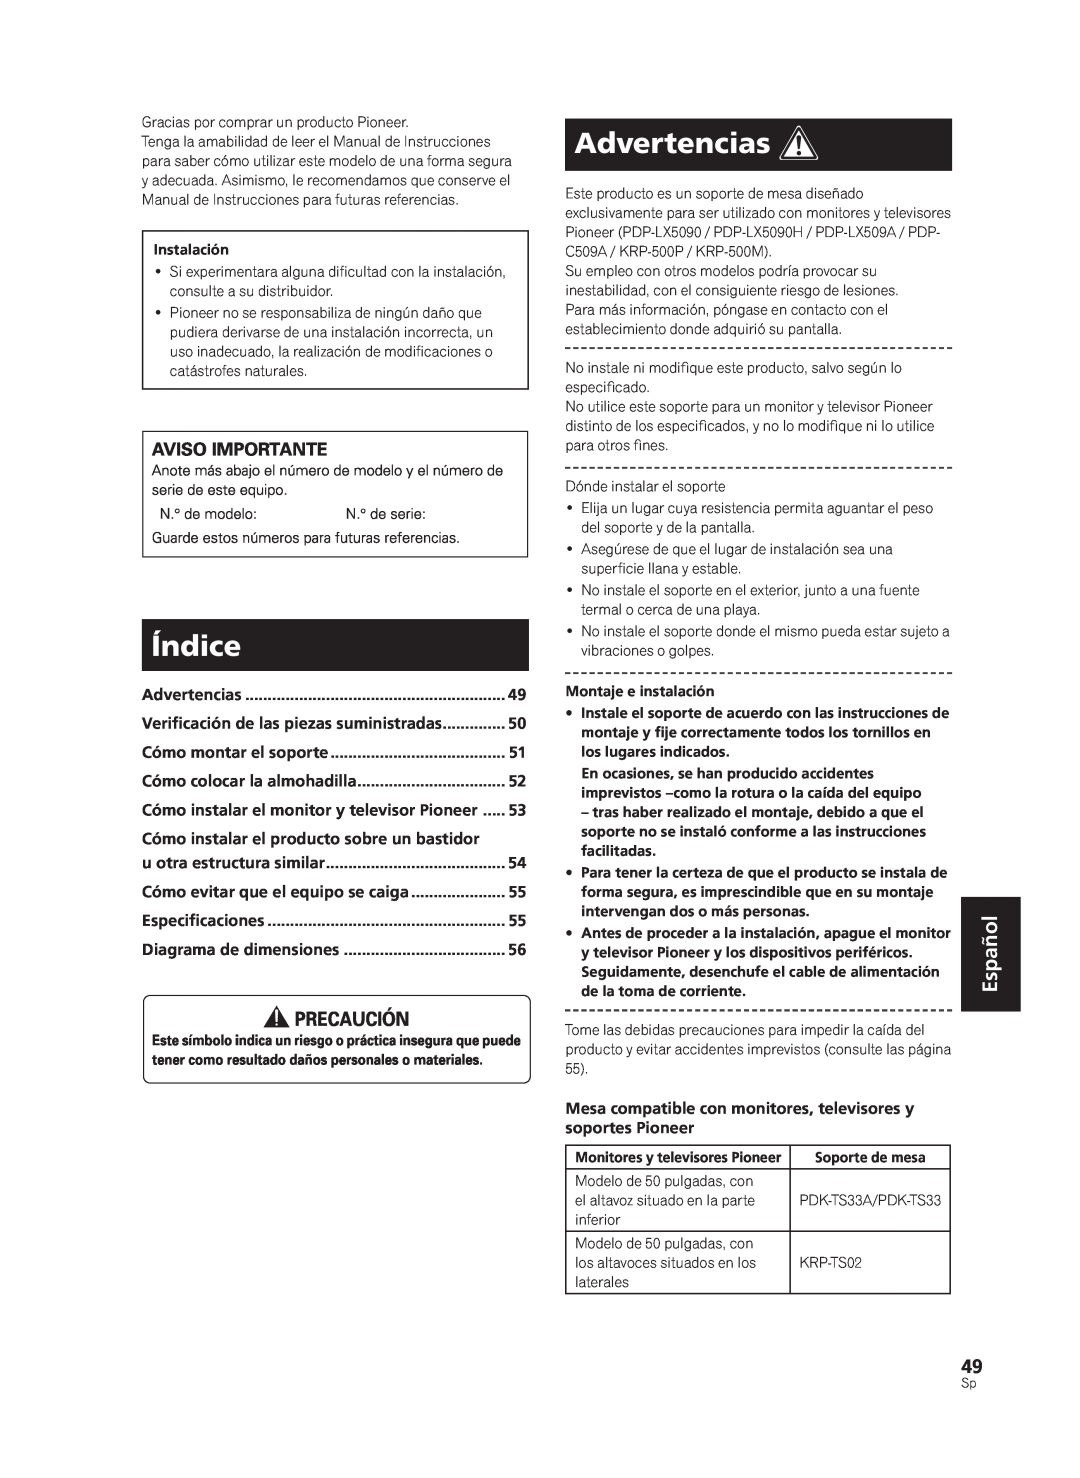 Pioneer PDK-TS33A, KRP-TS02 manual Índice, Advertencias 